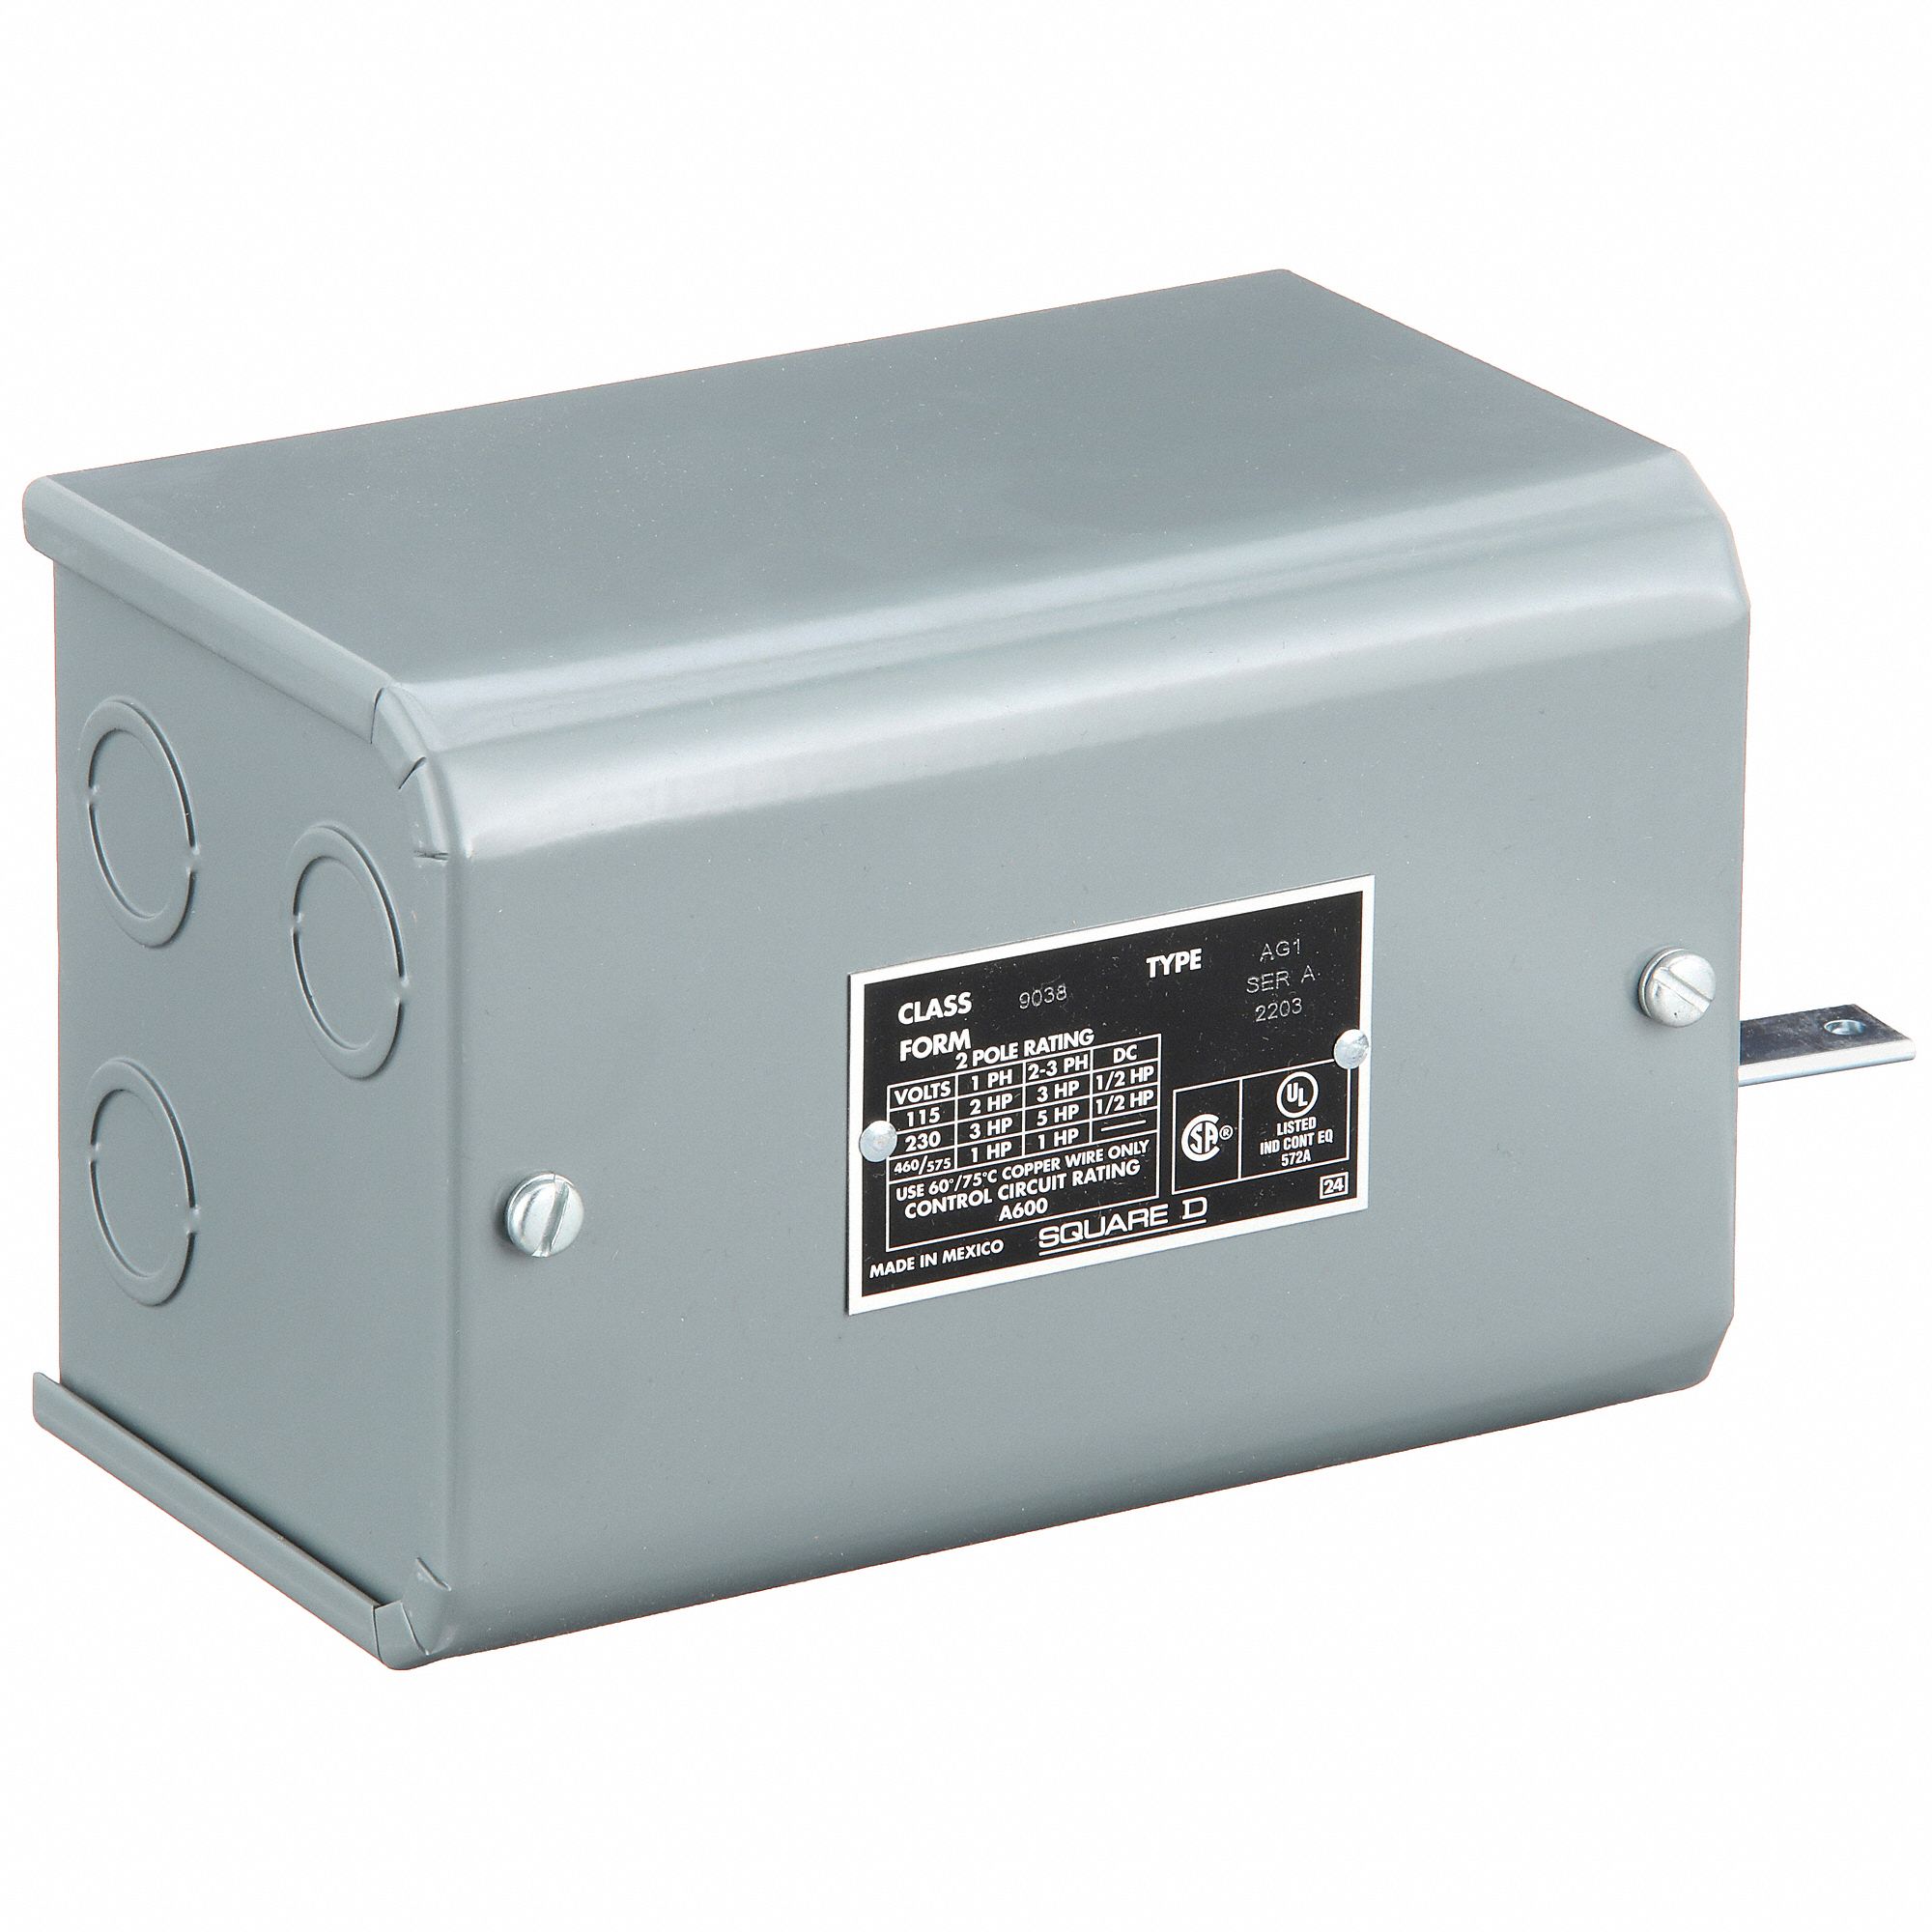 SQUARE D, 10 A Amps, DPST, Alternator Open Liquid Level Switch -  2FJ01|9038AG1 - Grainger